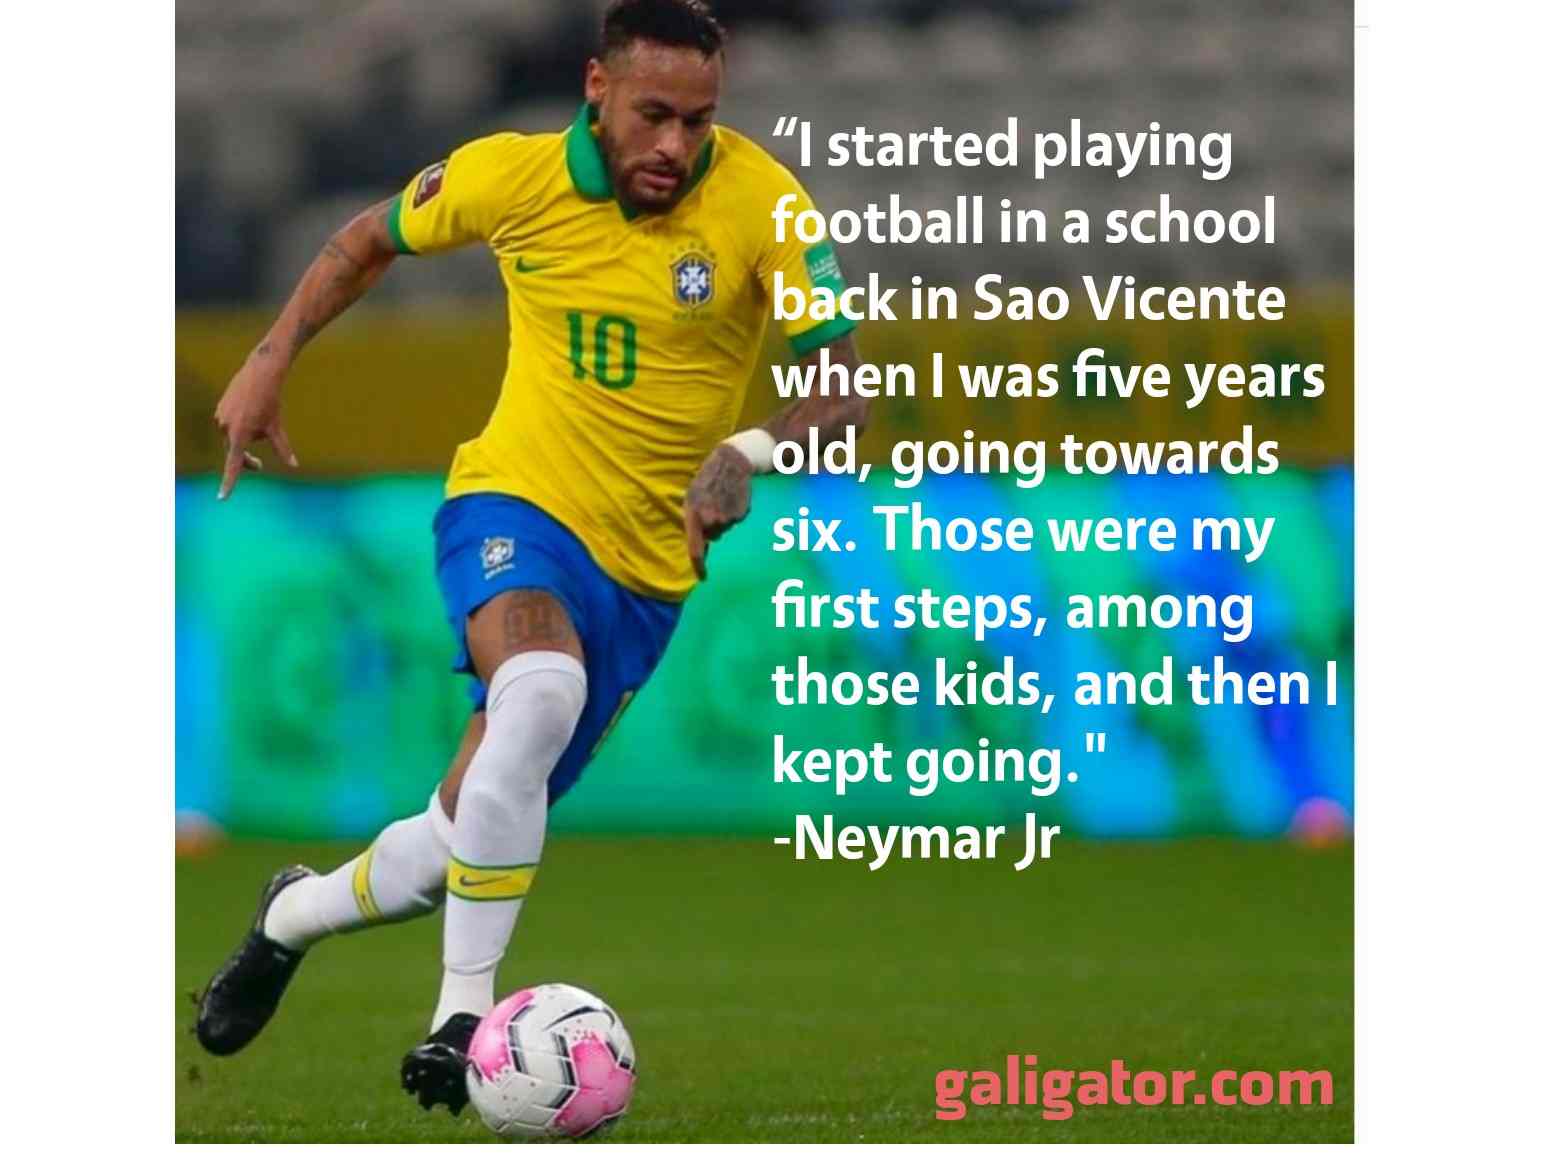  neymar quotes ,neymar inspirational quotes,neymar thoughts,neymar status,football quotes for whatsapp,neymar jr quotes